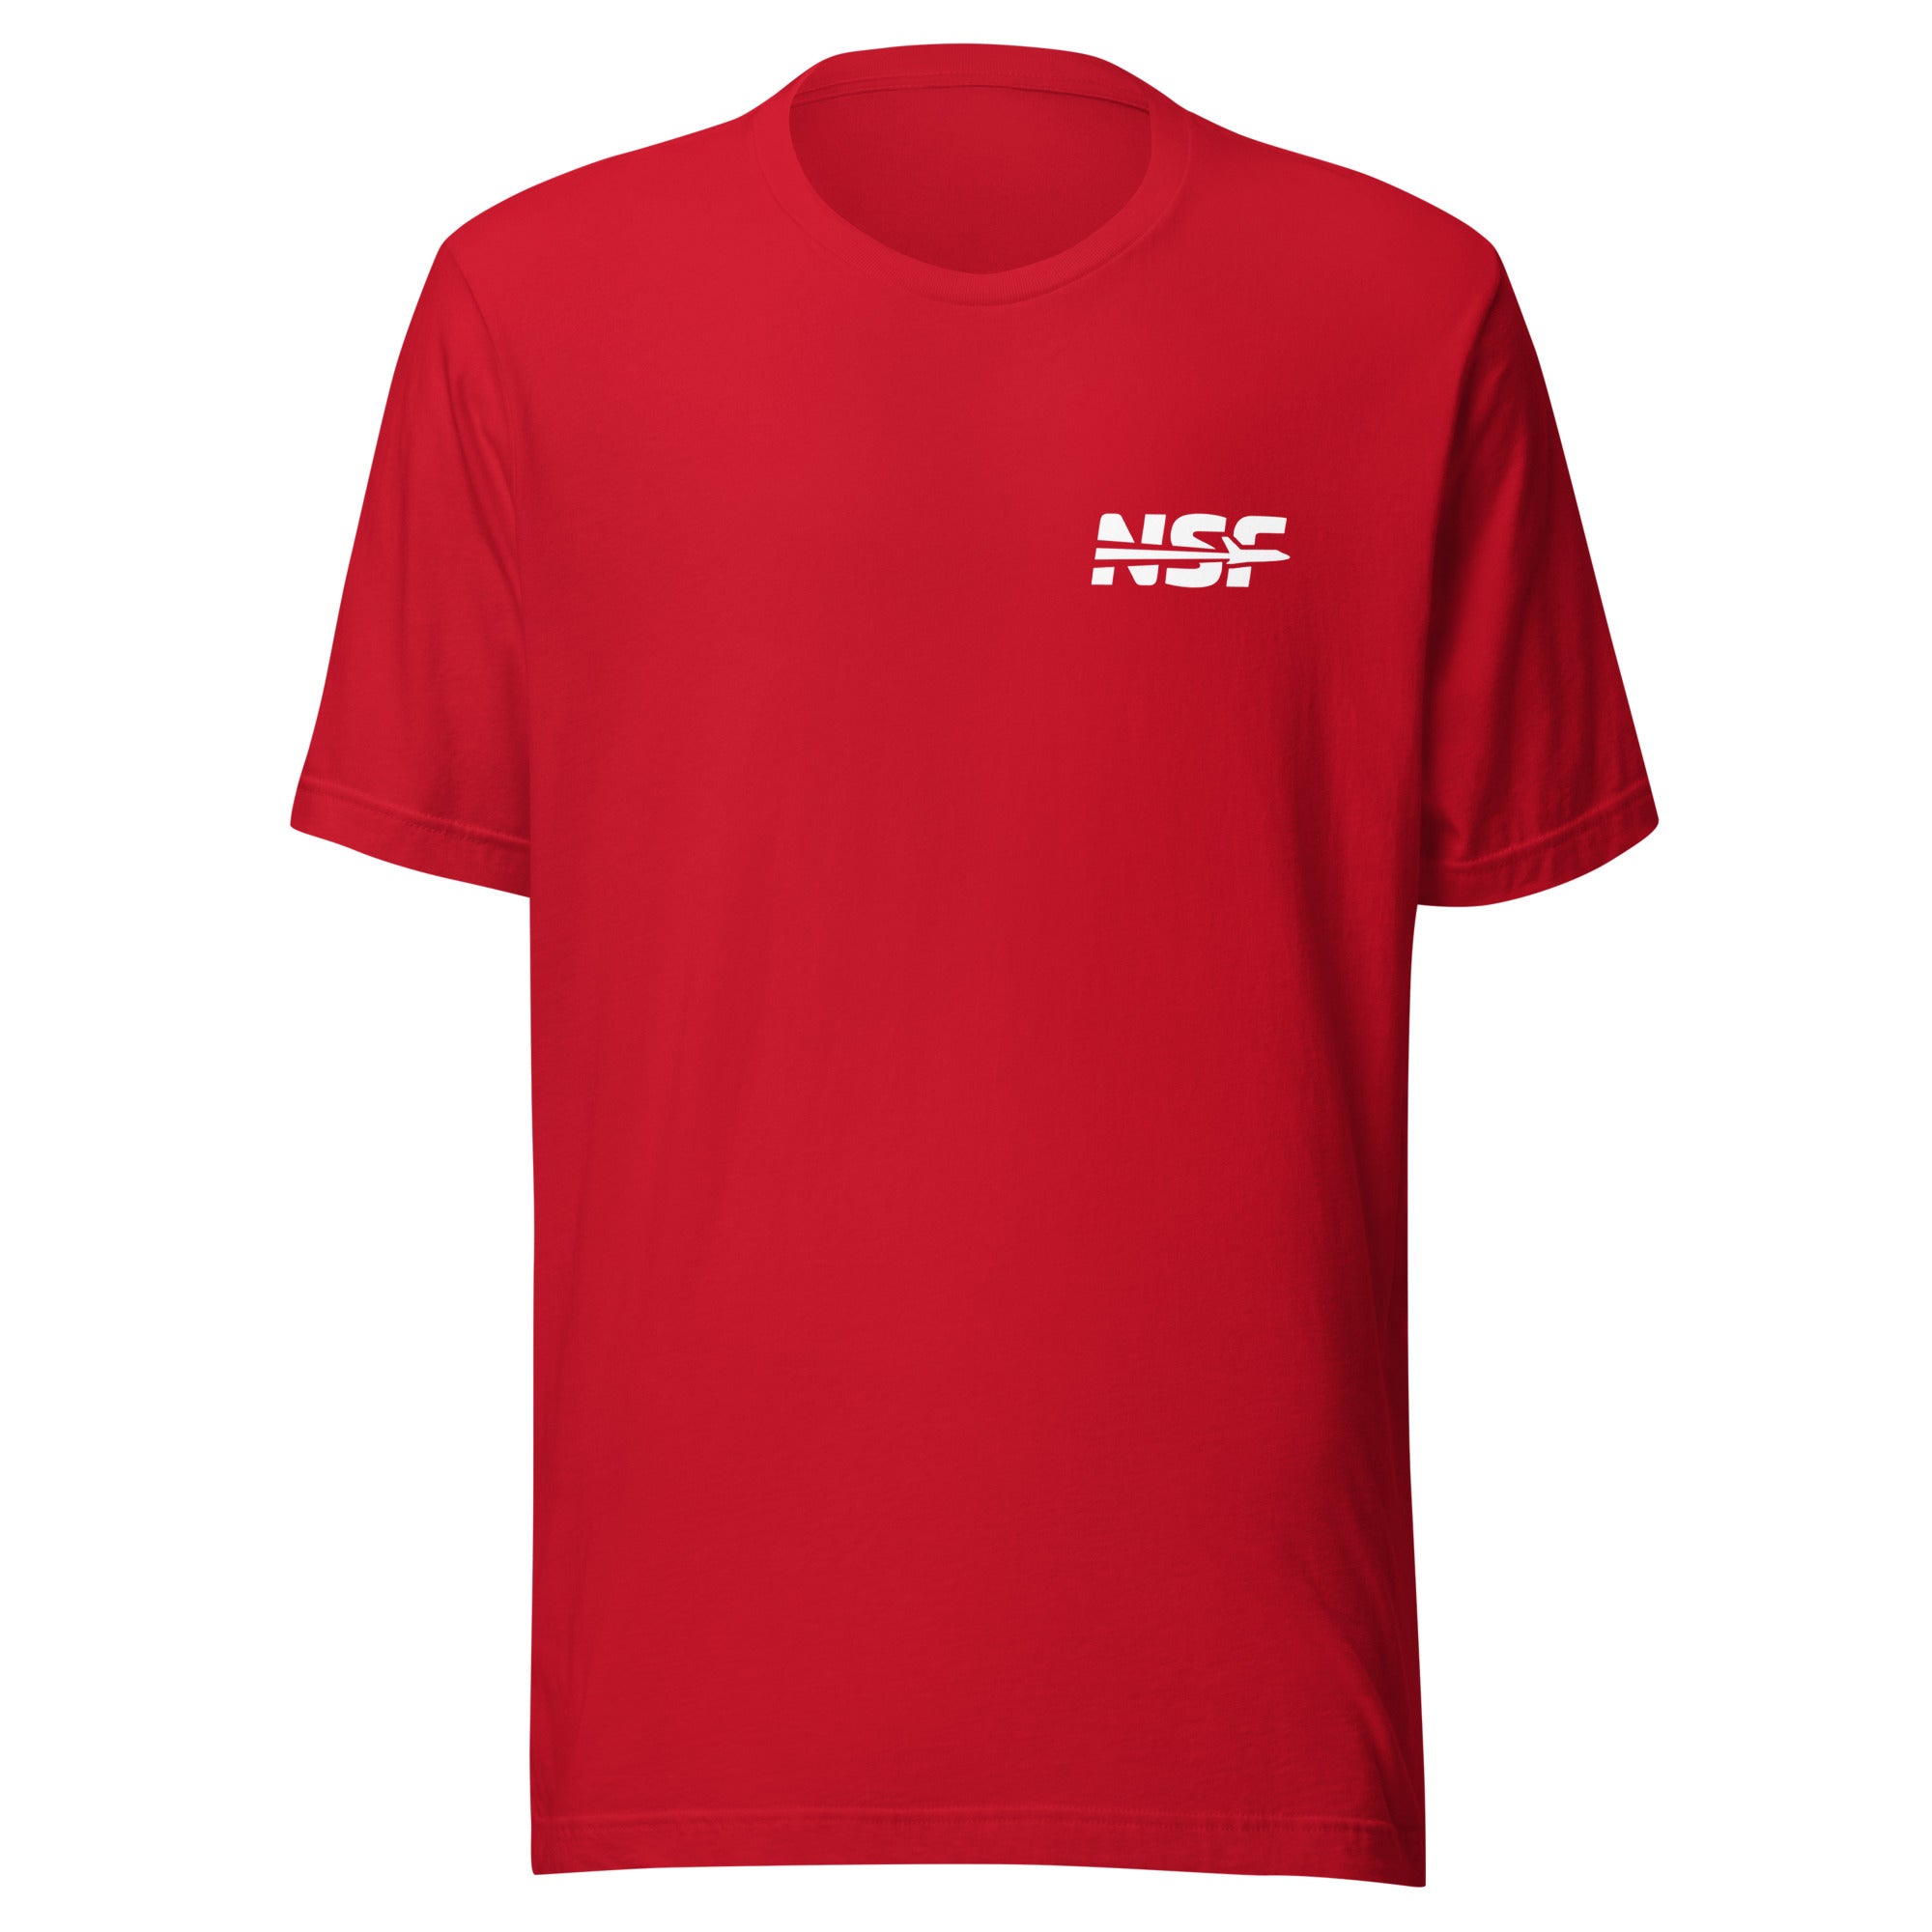 NSF Unisex T-shirt